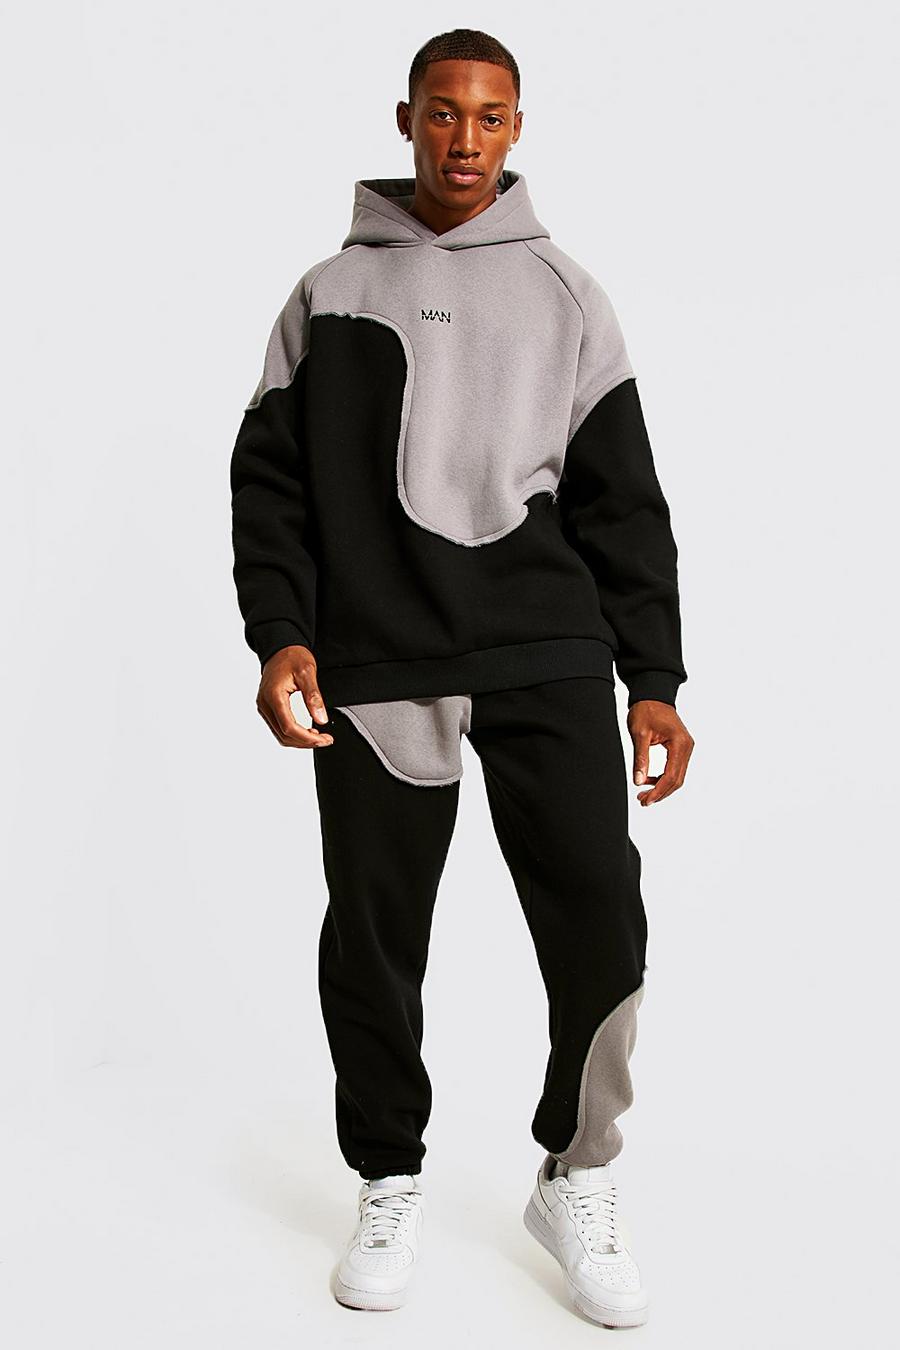 Gespleißter Oversize Man Trainingsanzug mit Kapuze, Charcoal gris image number 1